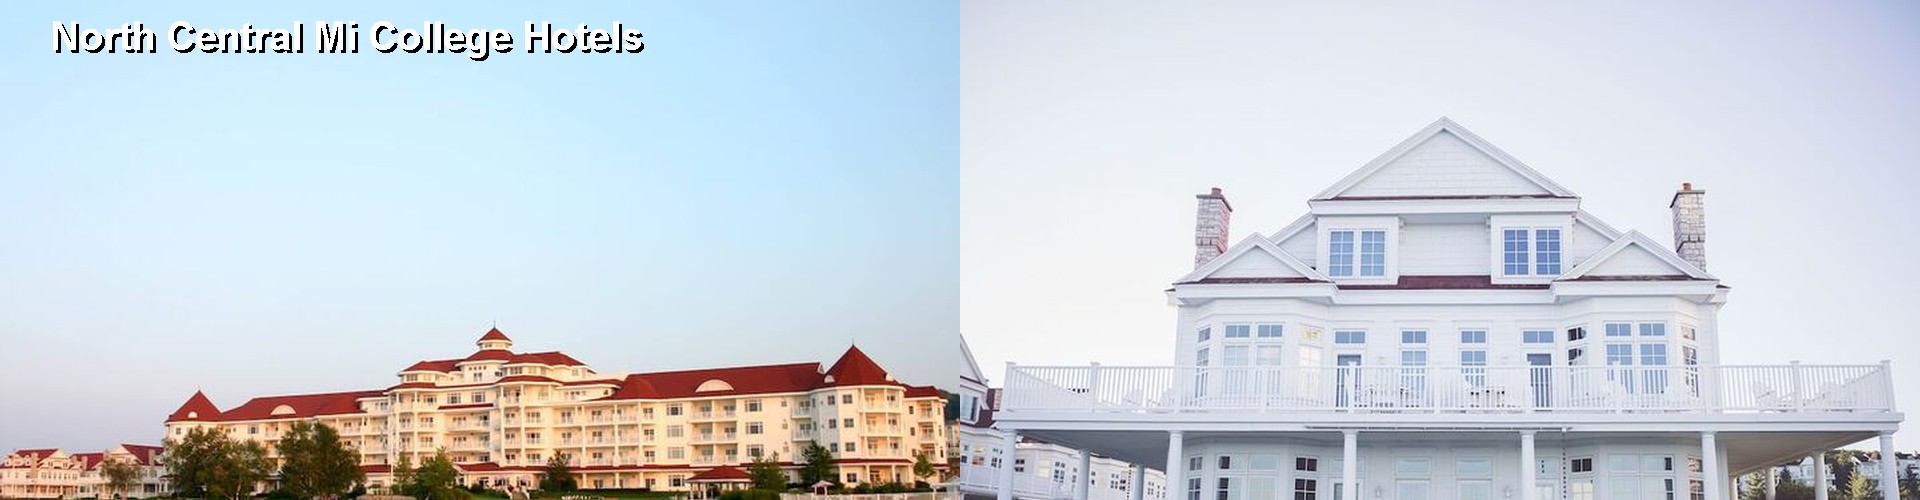 5 Best Hotels near North Central Mi College